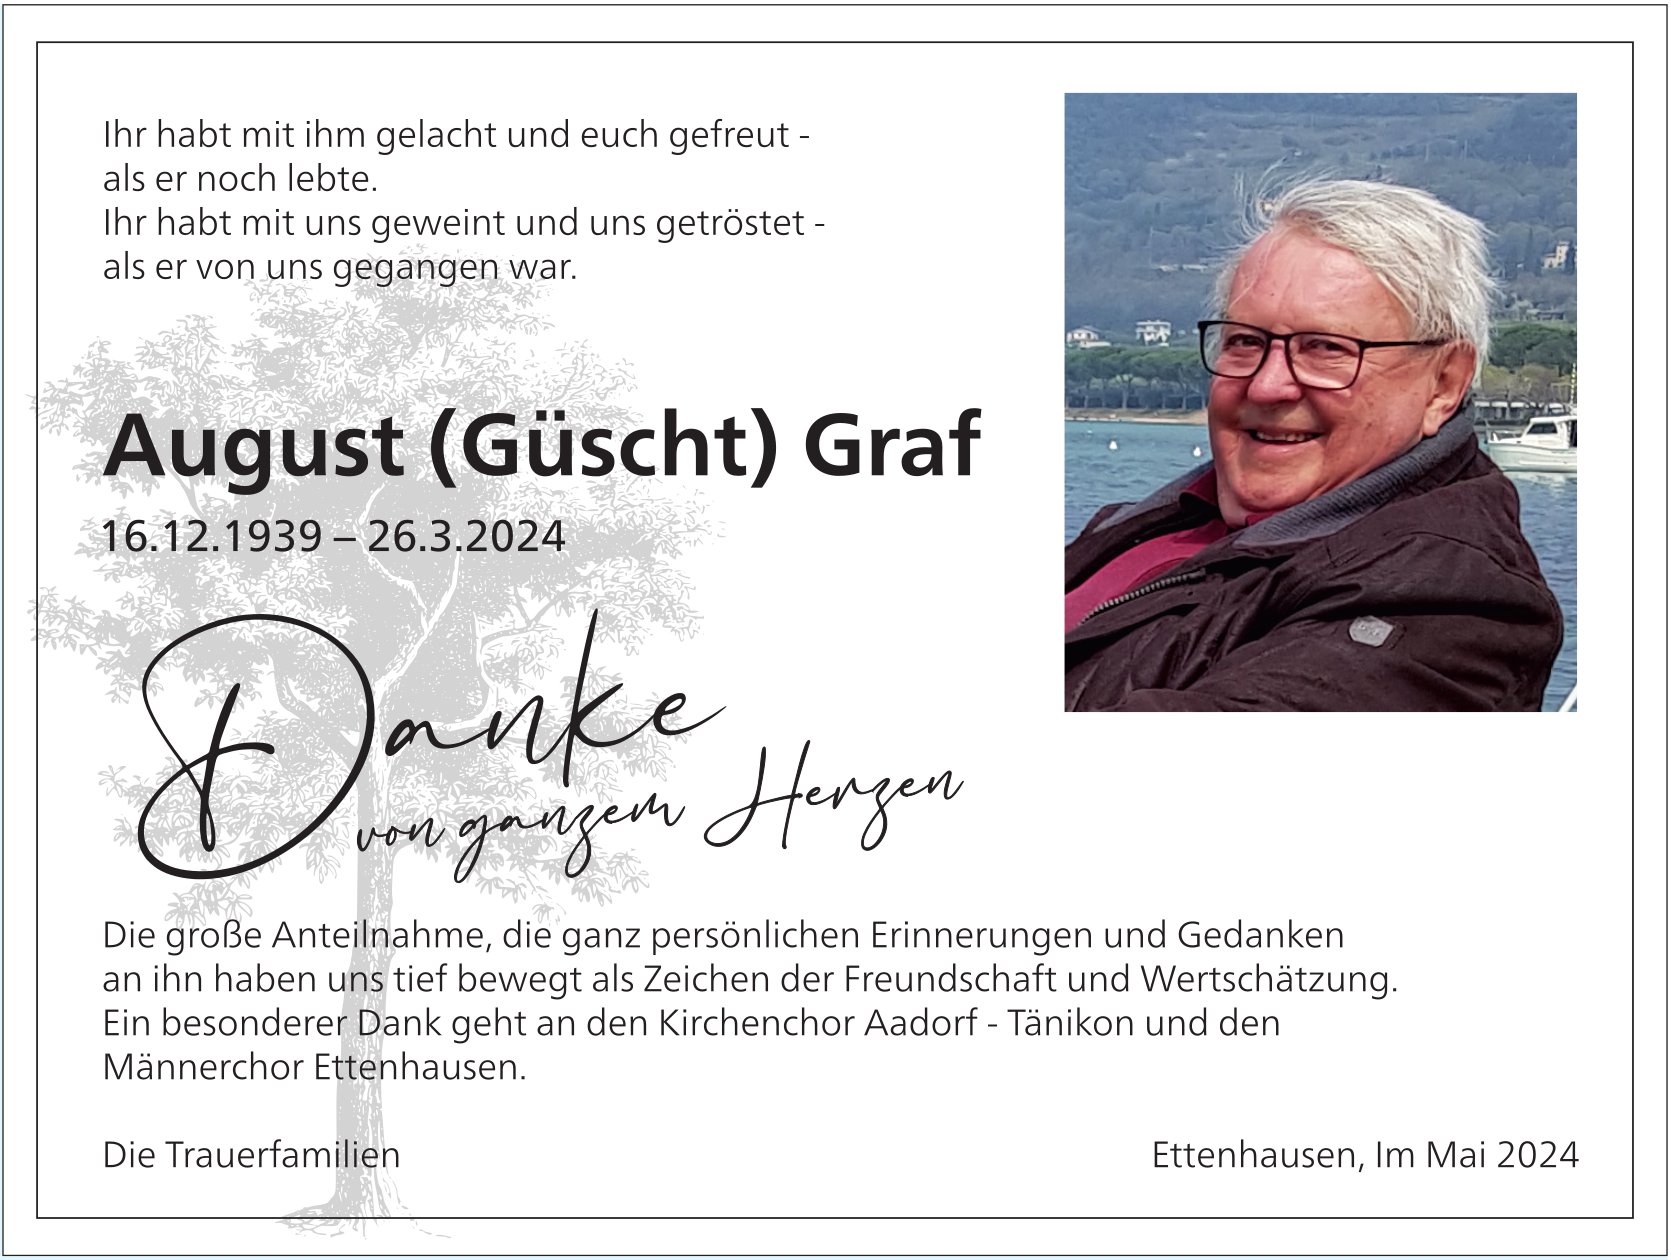 Graf August (Güscht), im Mai 2024 / DS